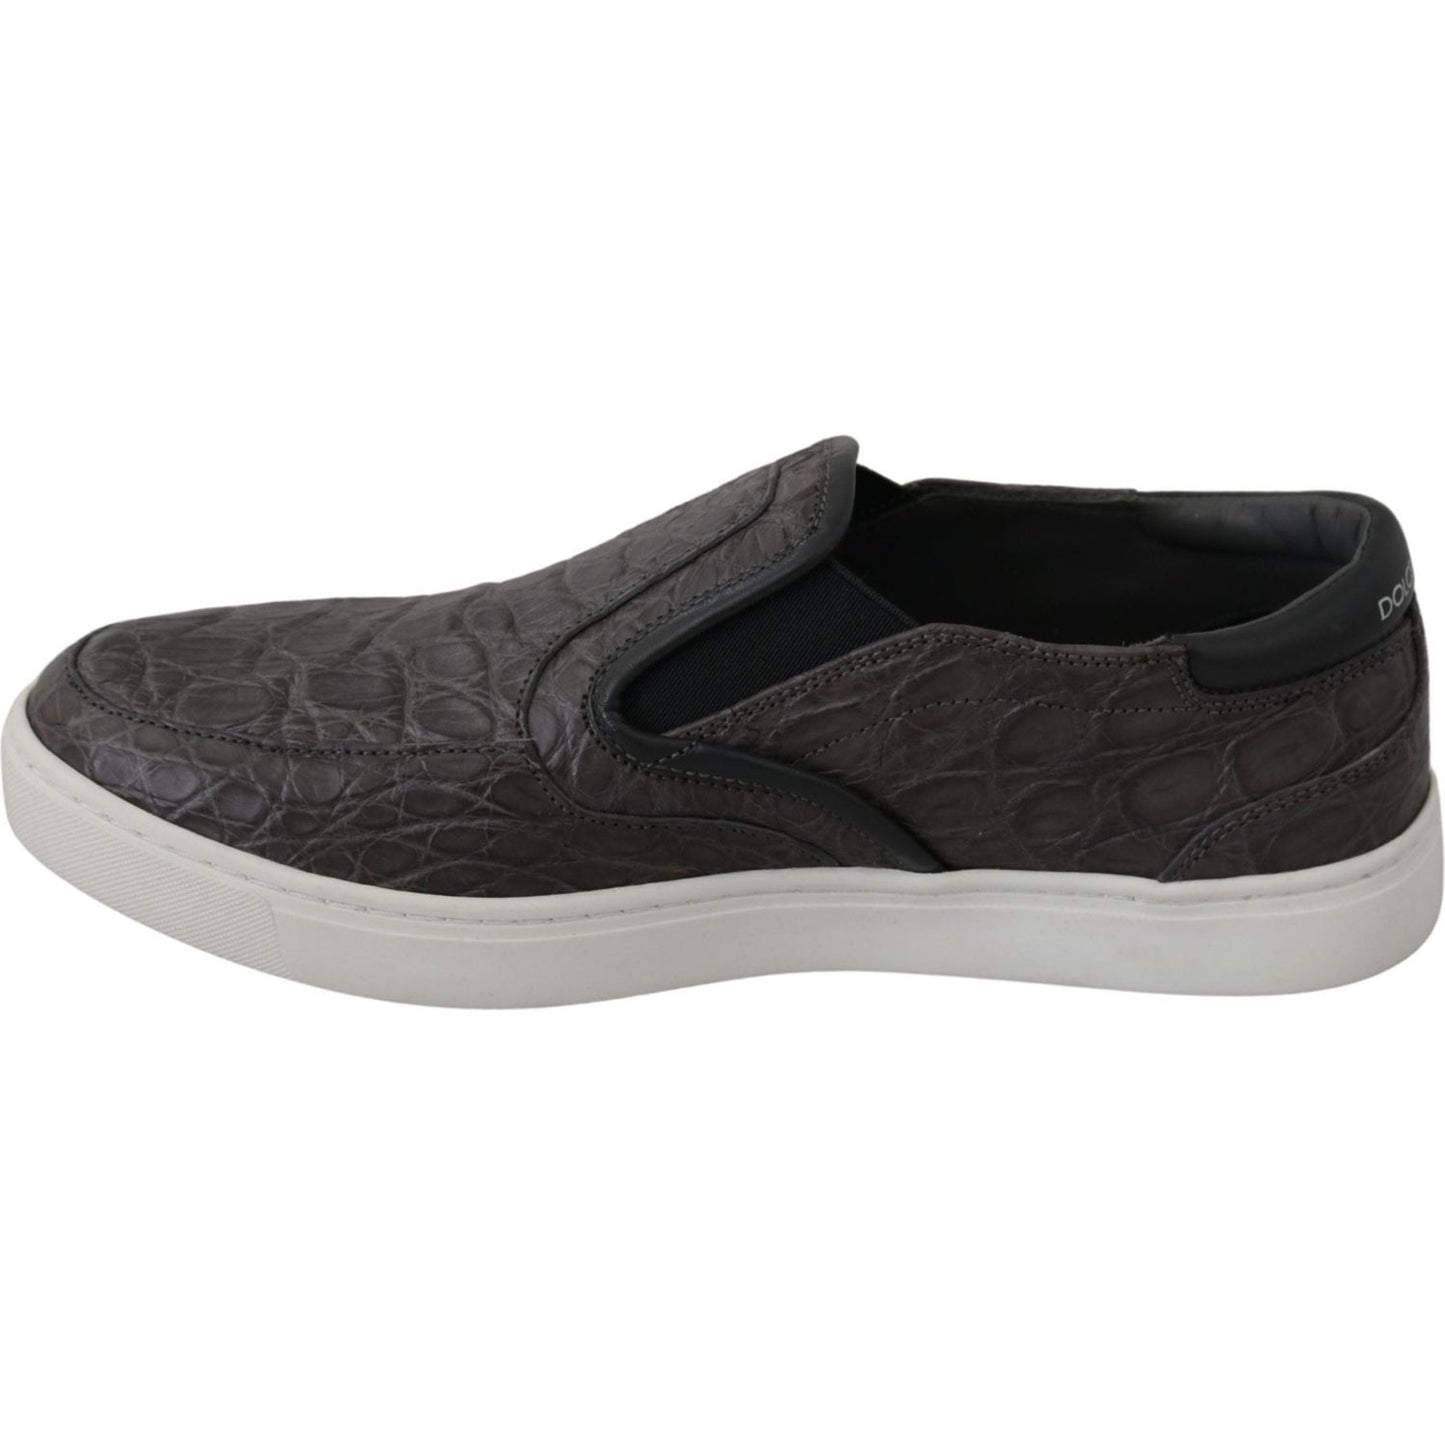 Dolce & Gabbana Elegant Gray Caiman Leather Loafers gray-leather-flat-caiman-mens-loafers-shoes IMG_9531-scaled-95c55a73-908.jpg